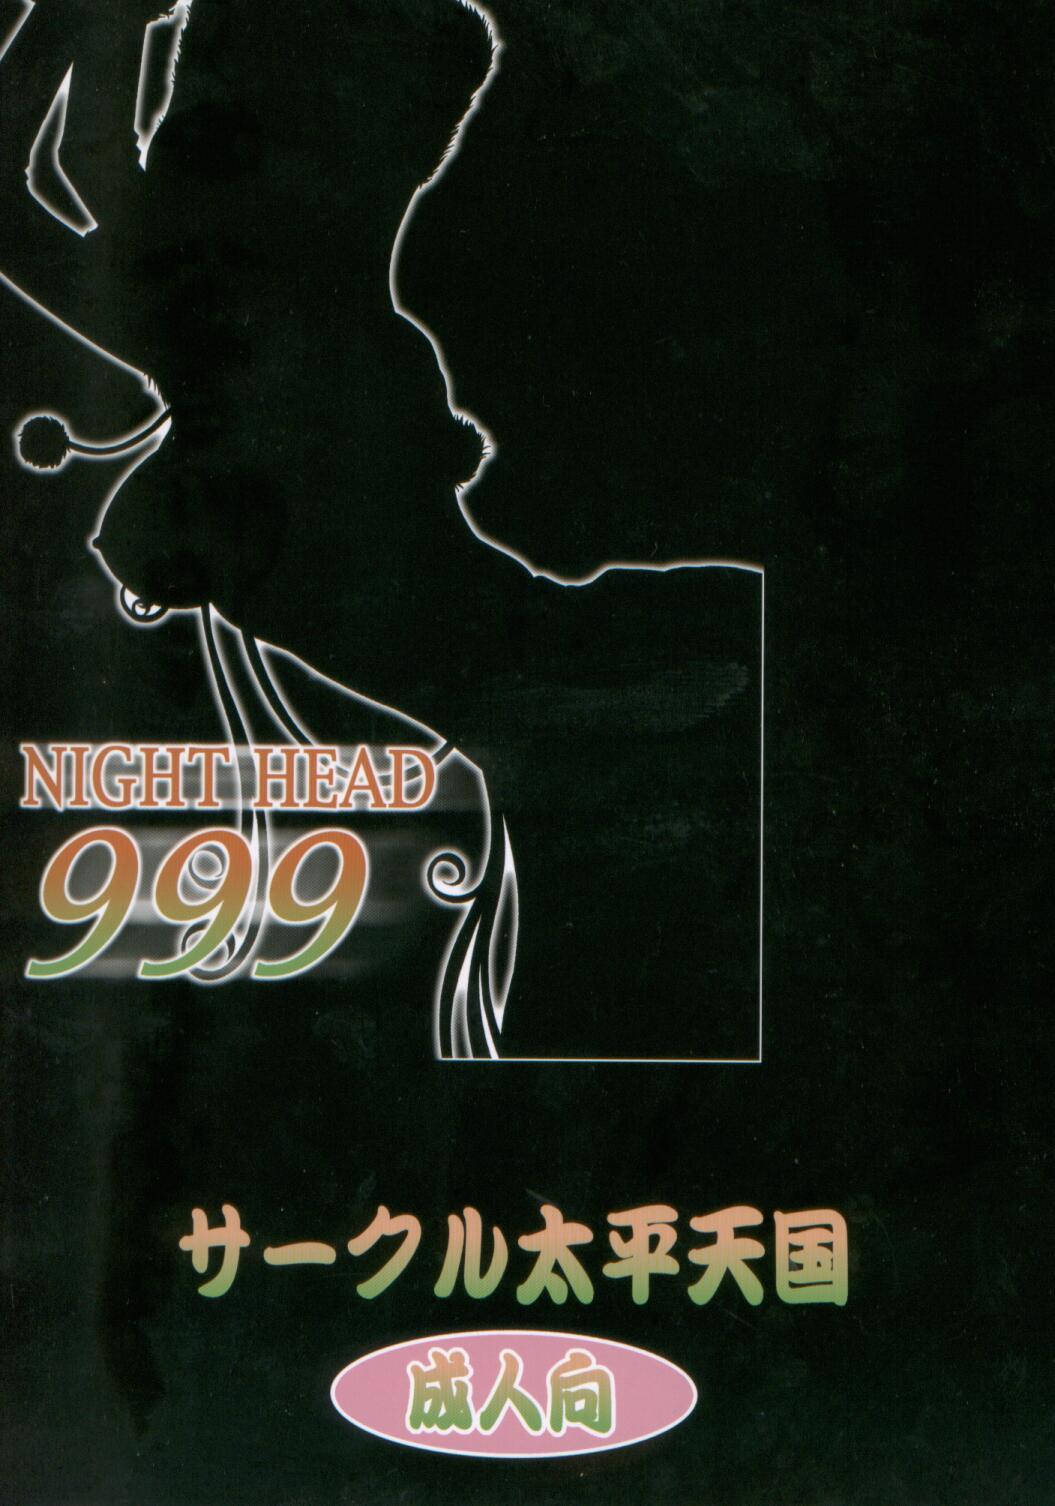 NIGHT HEAD 999 26